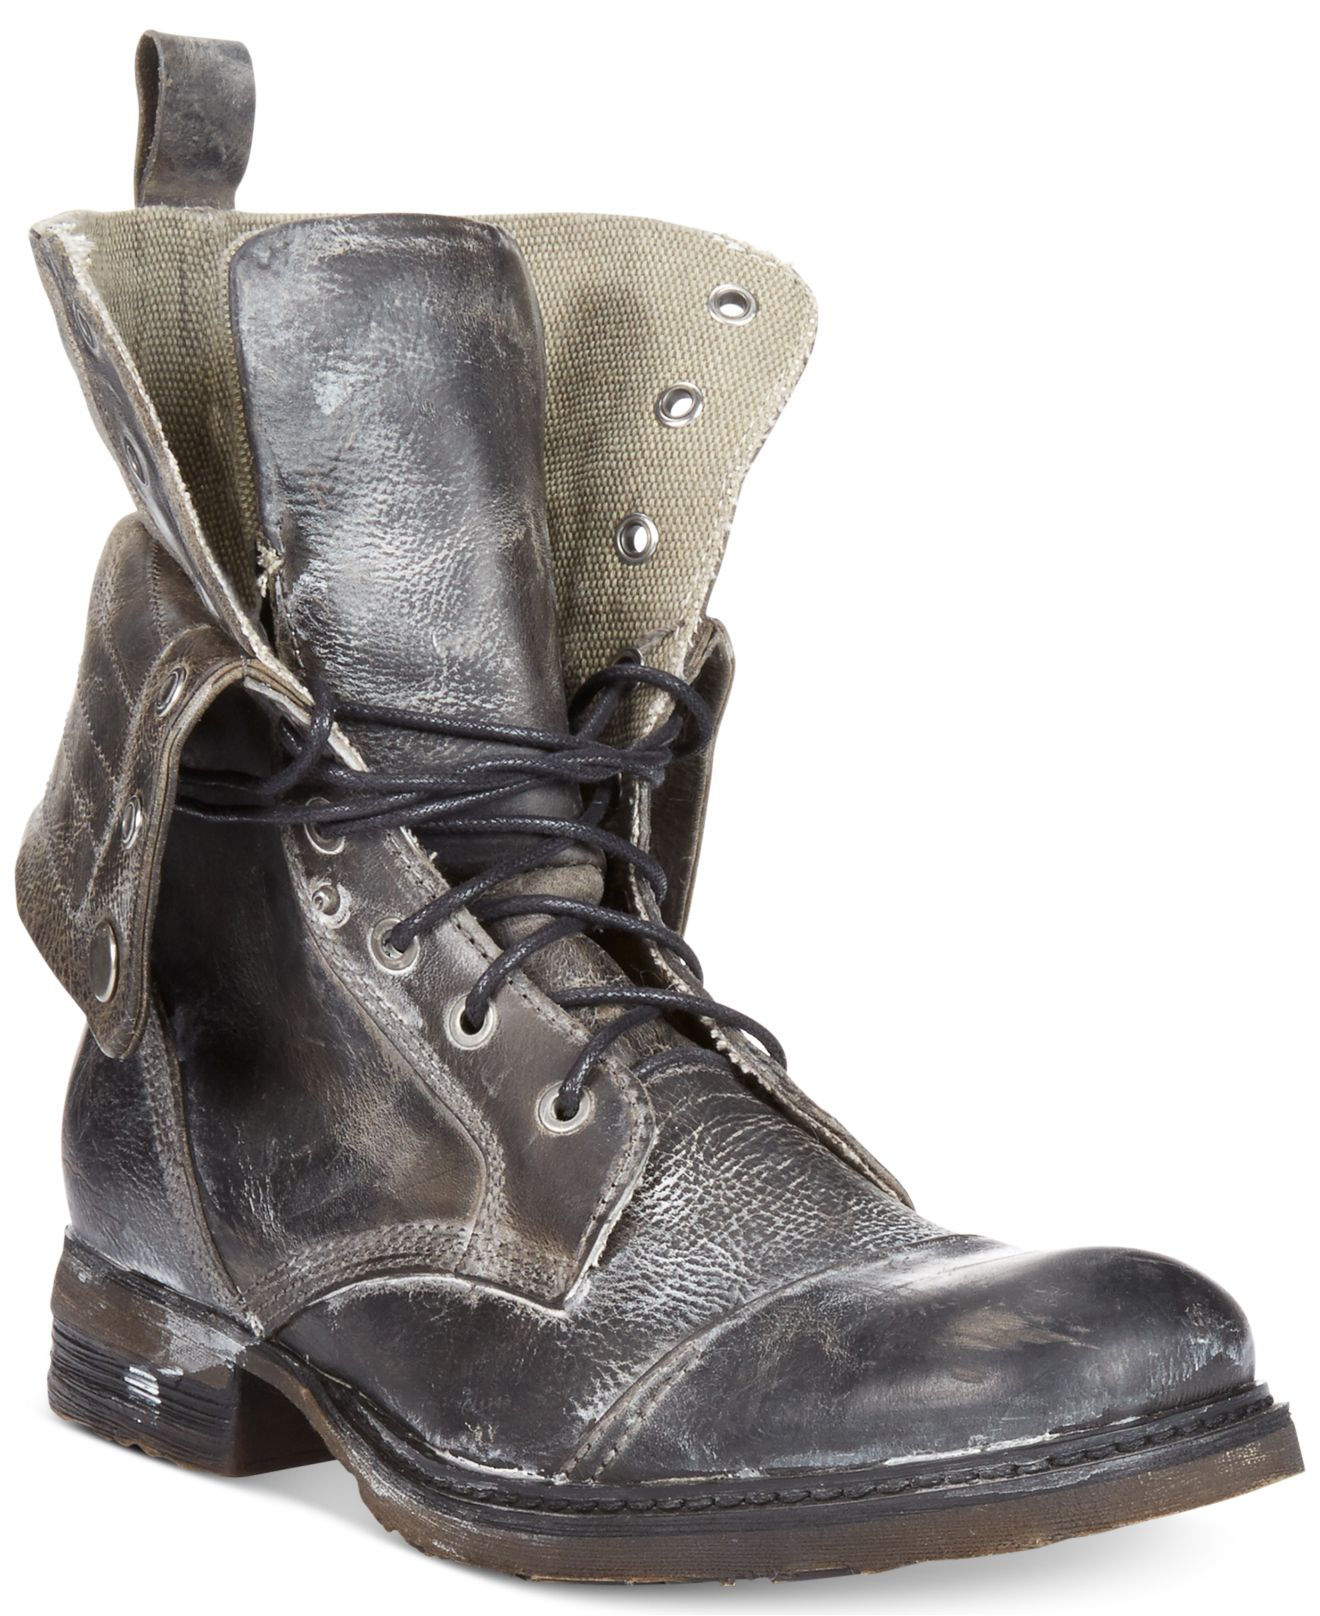 Bed Stu Bed Stu James Cap-toe Boots in Gray for Men - Lyst